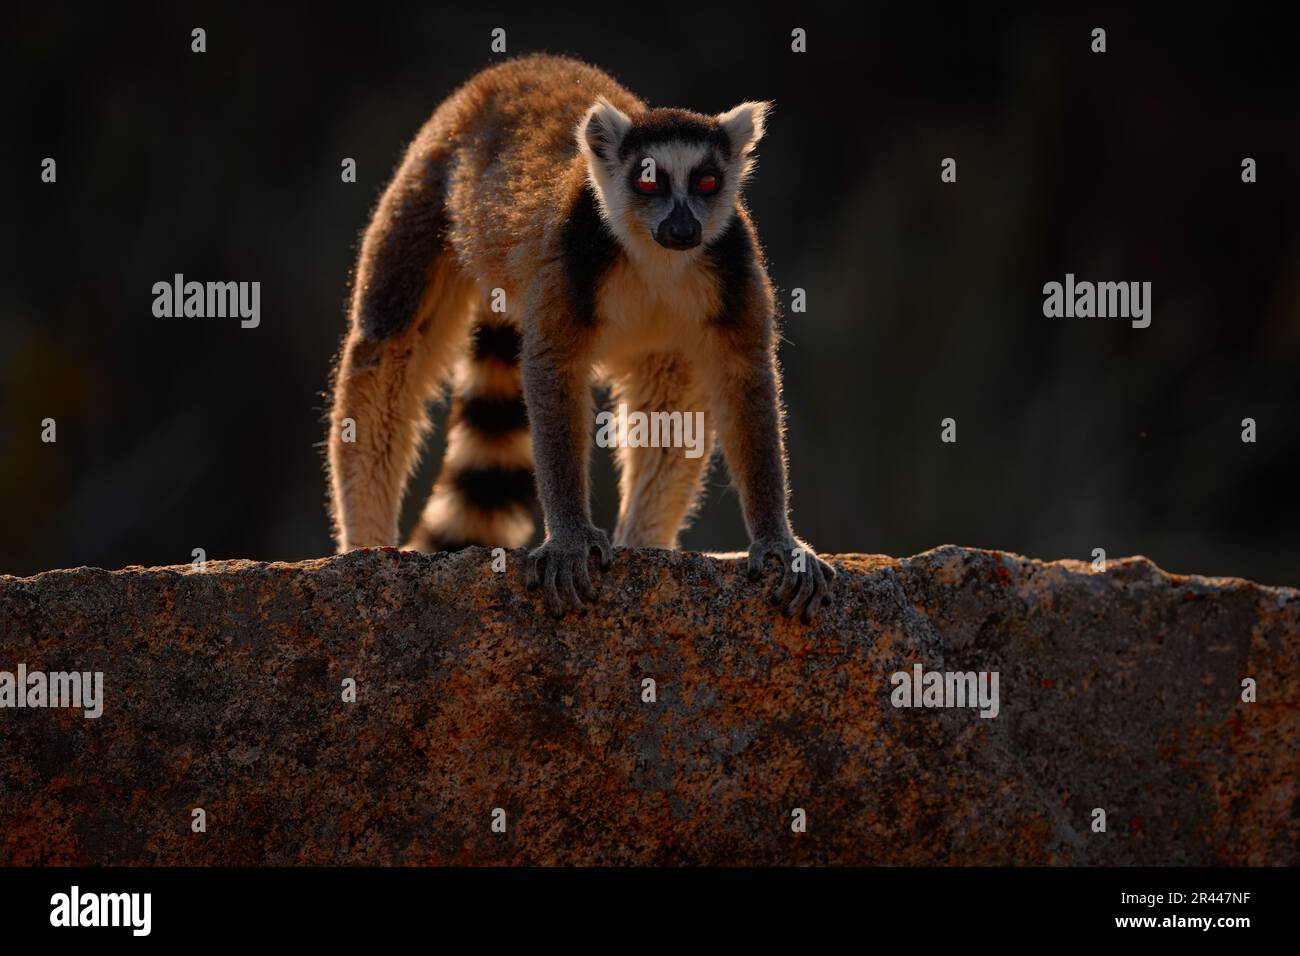 Affe mit Granitfelsen, Sonnenuntergang. Madagaskar Wildtiere, Ringschwanzlemur, Lemur catta. Tier aus Madagaskar, Afrika, orangefarbene Augen. Abendsonnen Stockfoto